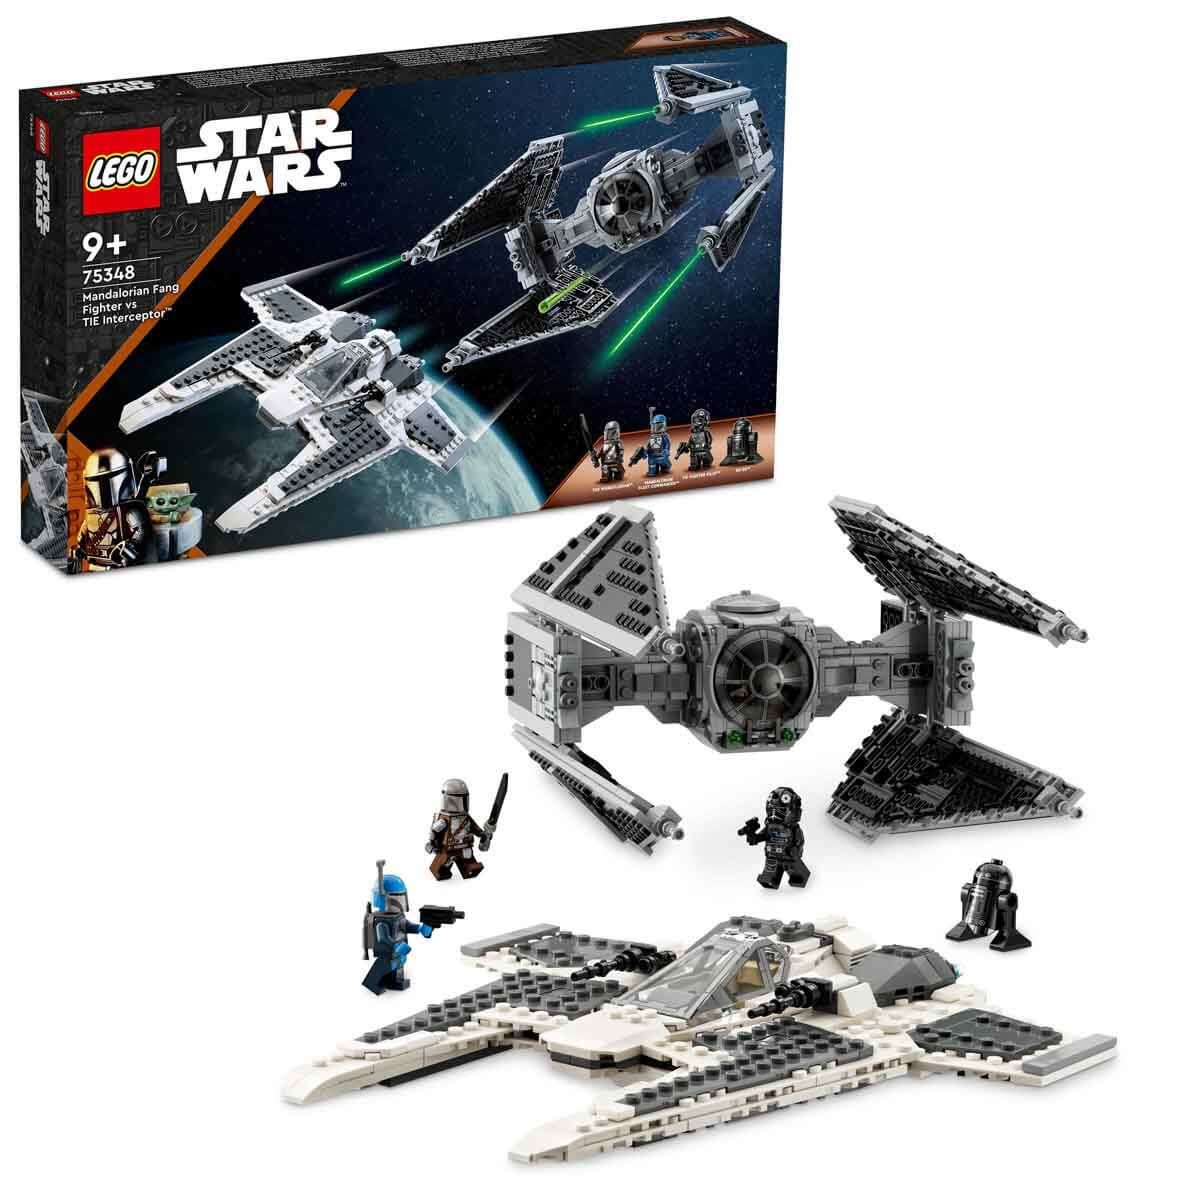 Lisinya193 Lego Star Wars Mandalorian Fang Fighter Tıe Interceptor'a Karşı 75348